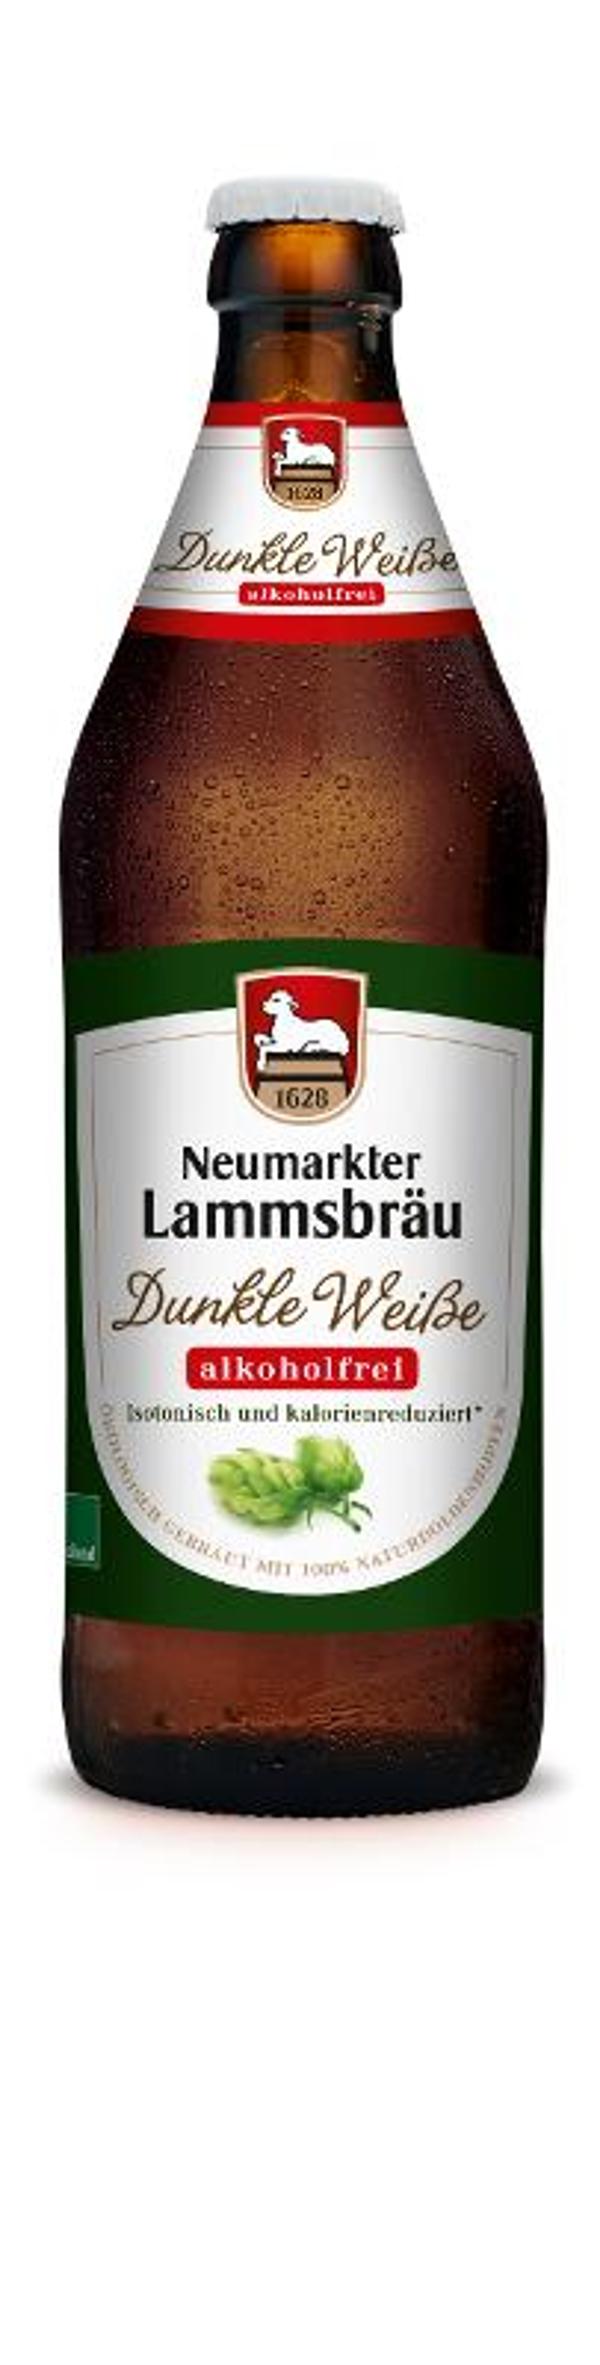 Produktfoto zu Kiste Lammsbräu Dunkle Weisse alkoholfrei 10*0,5l